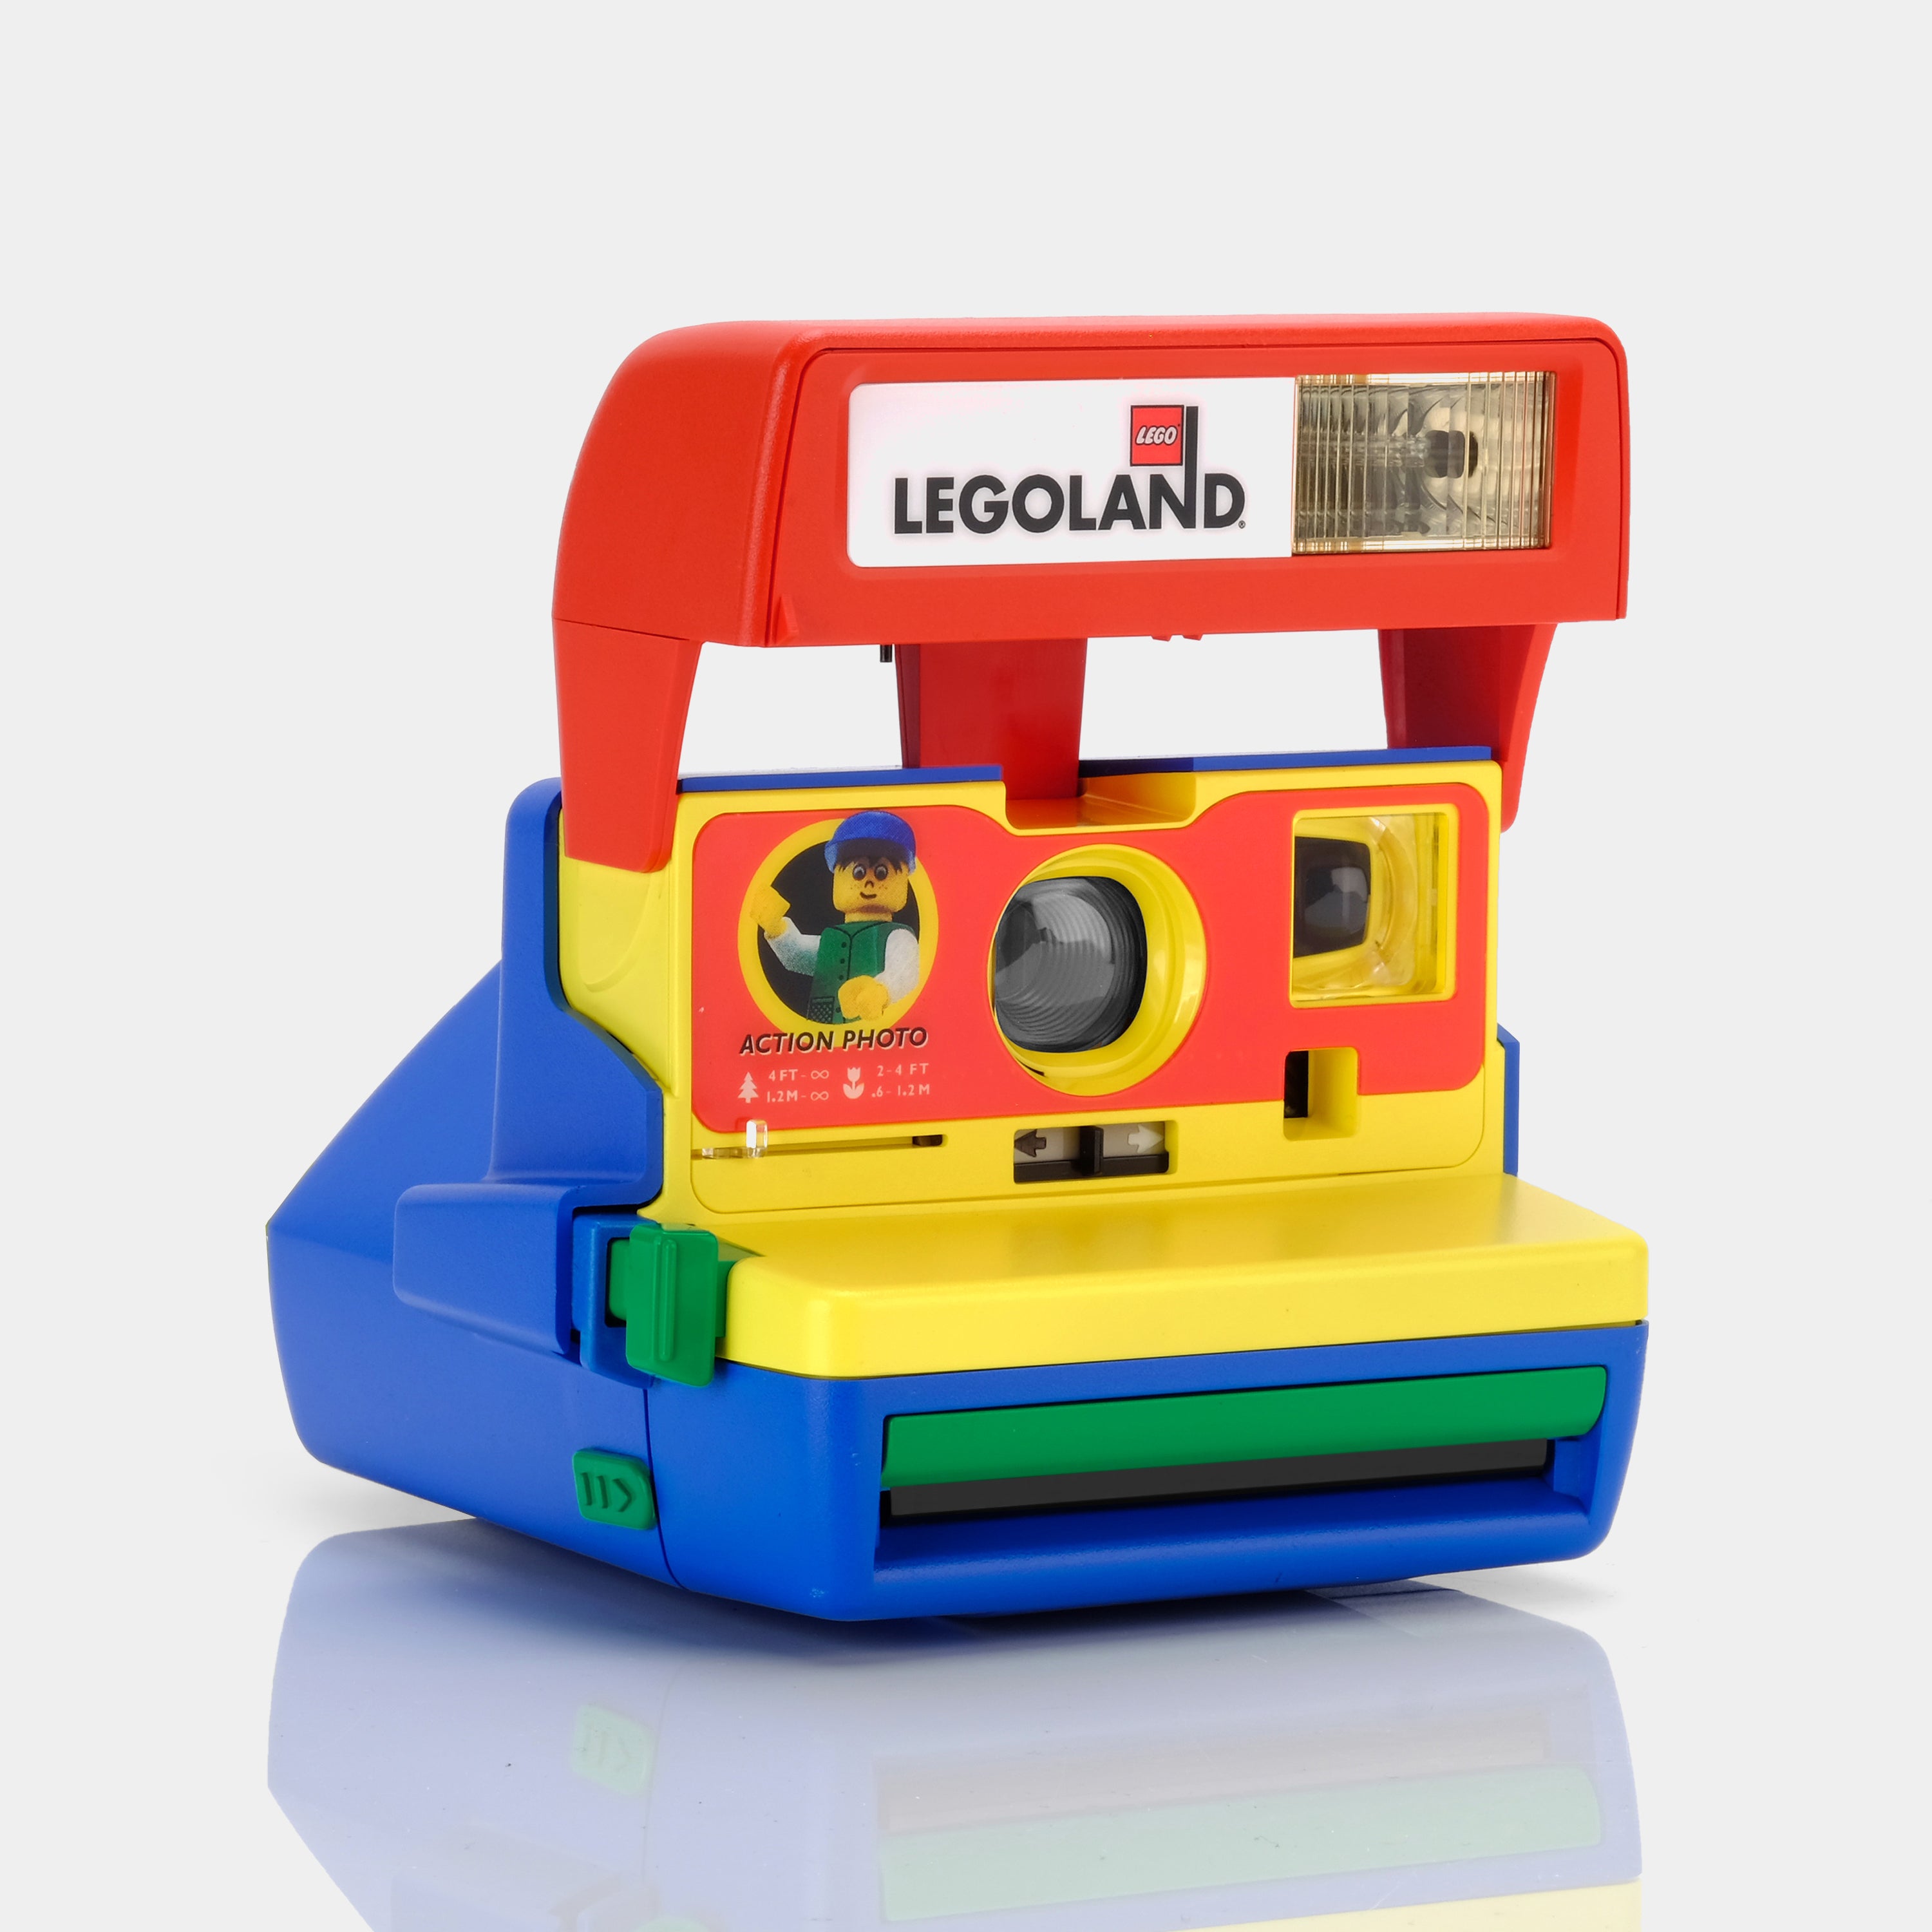 LEGO MOC Polaroid Land Camera 1000 by Brick-o-lantern